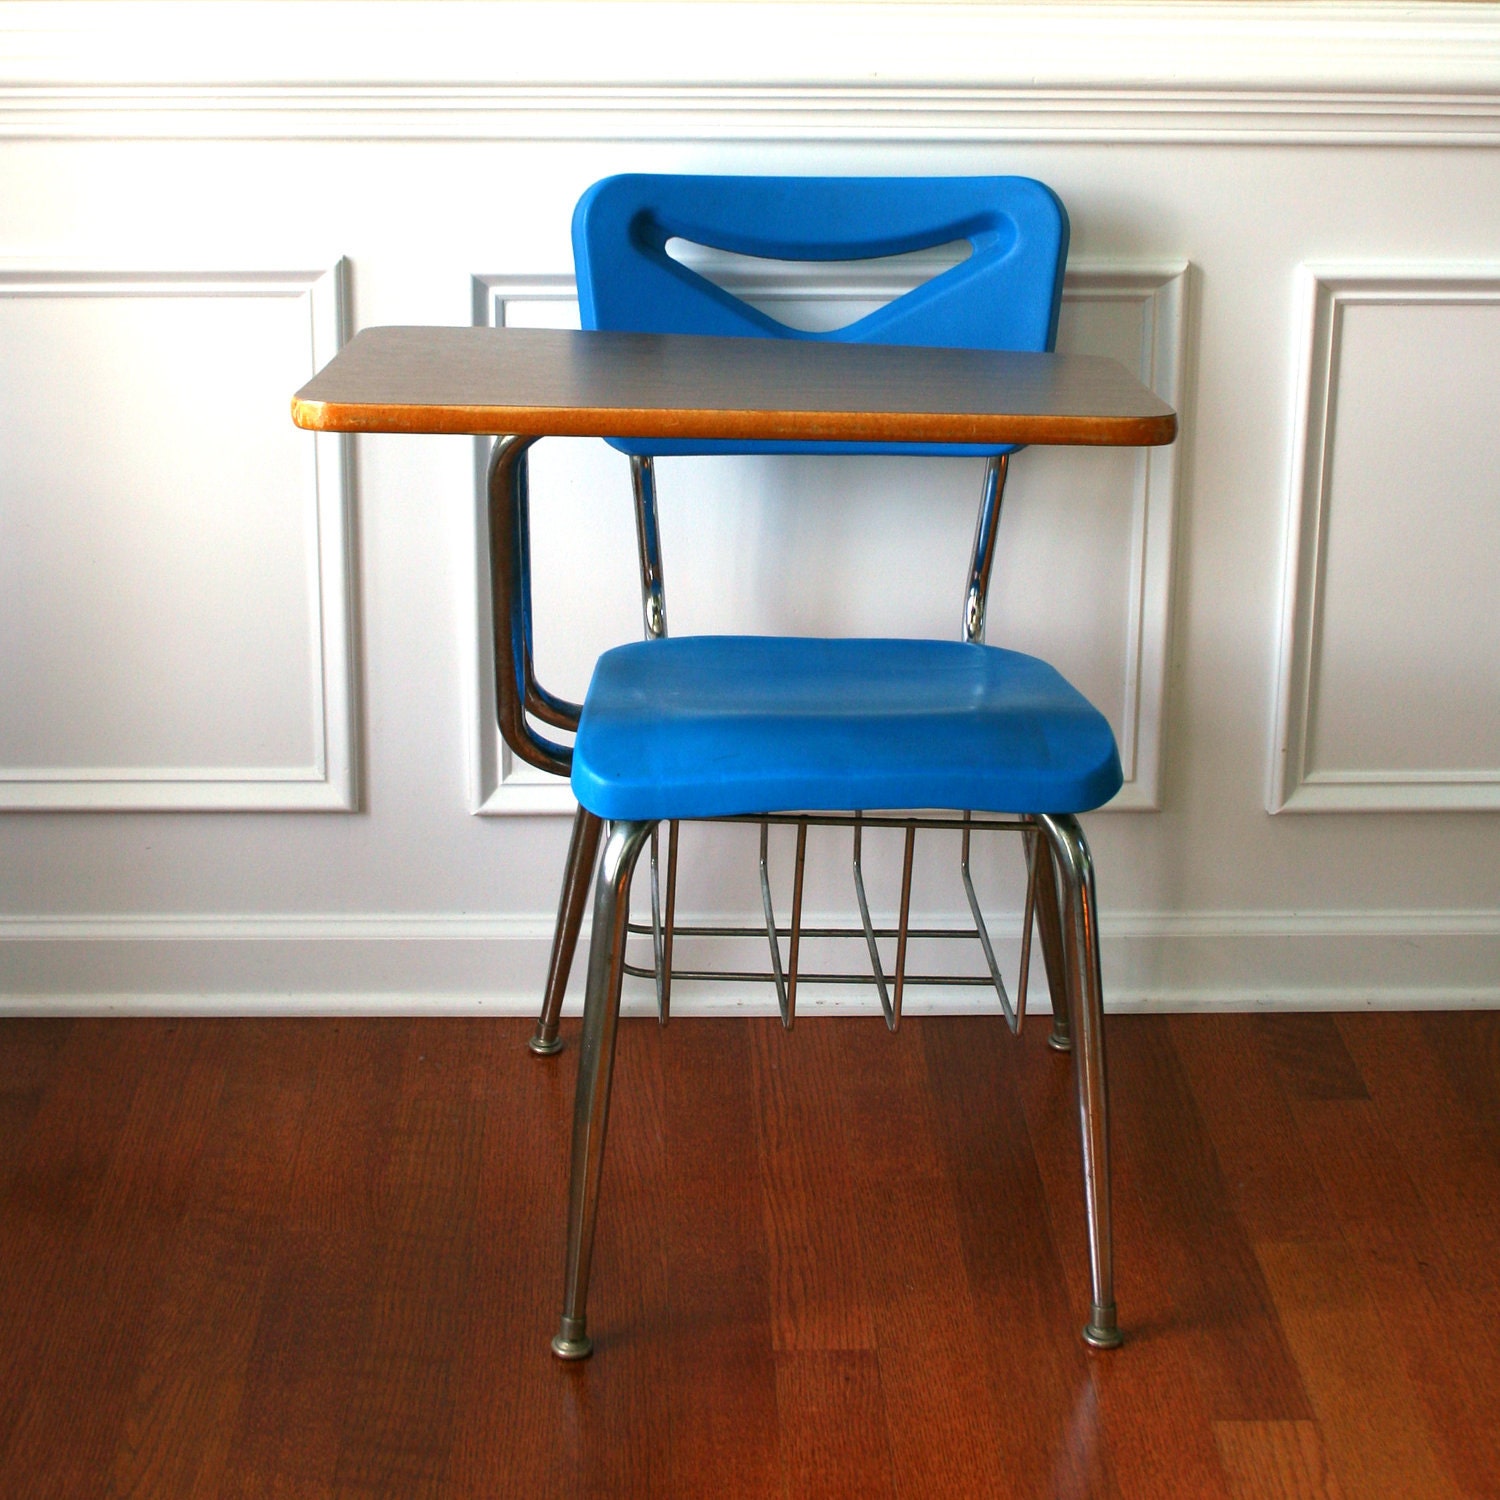 School Desk Storage and Chair. Metal. Plastic. Blue. Industrial Home Decor. Nautical. Water. Metal. Retro. Mod. Triangle. Rhapsodyattic. - RhapsodyAttic